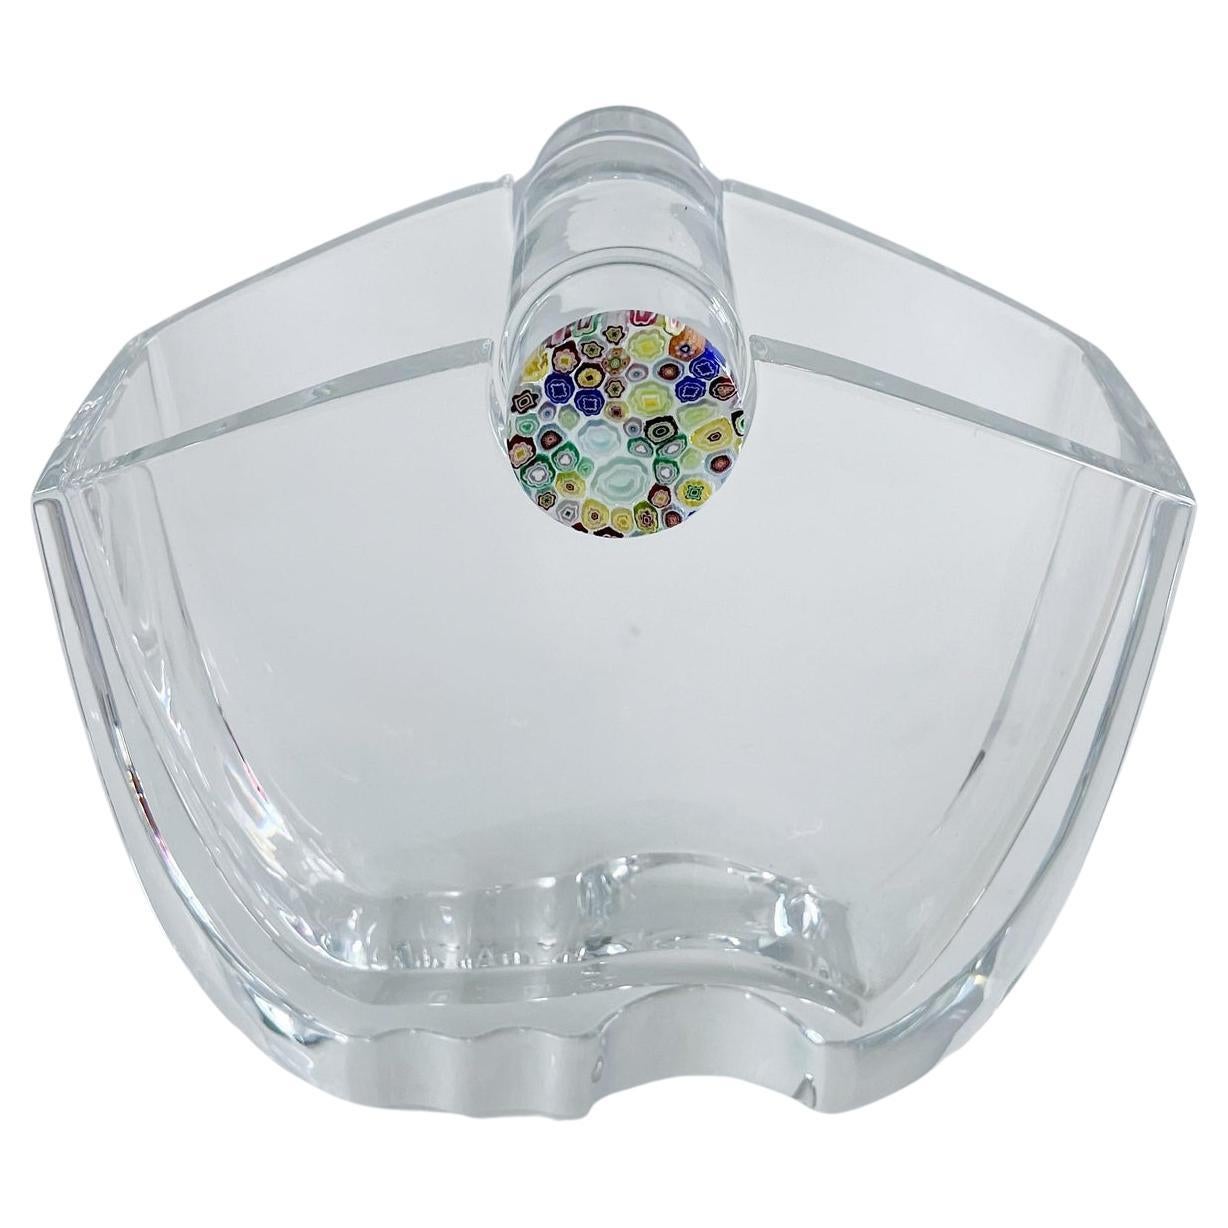 Baccarat "Oceanie" Crystal Millefiori Vase Designed by Thomas Bastide